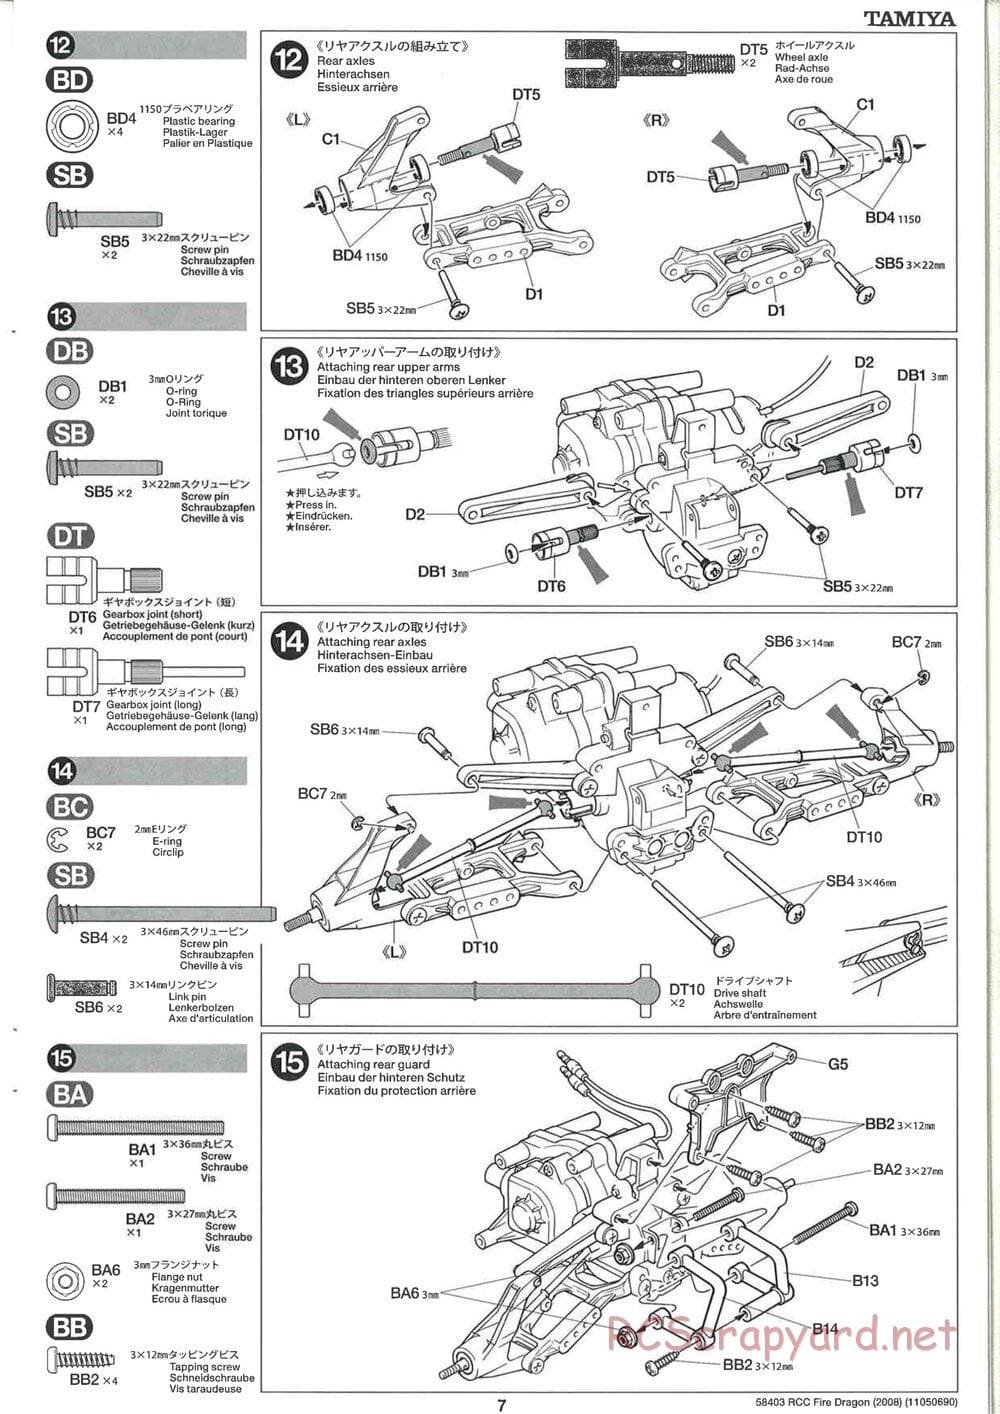 Tamiya - Fire Dragon 2008 - TS2 Chassis - Manual - Page 7